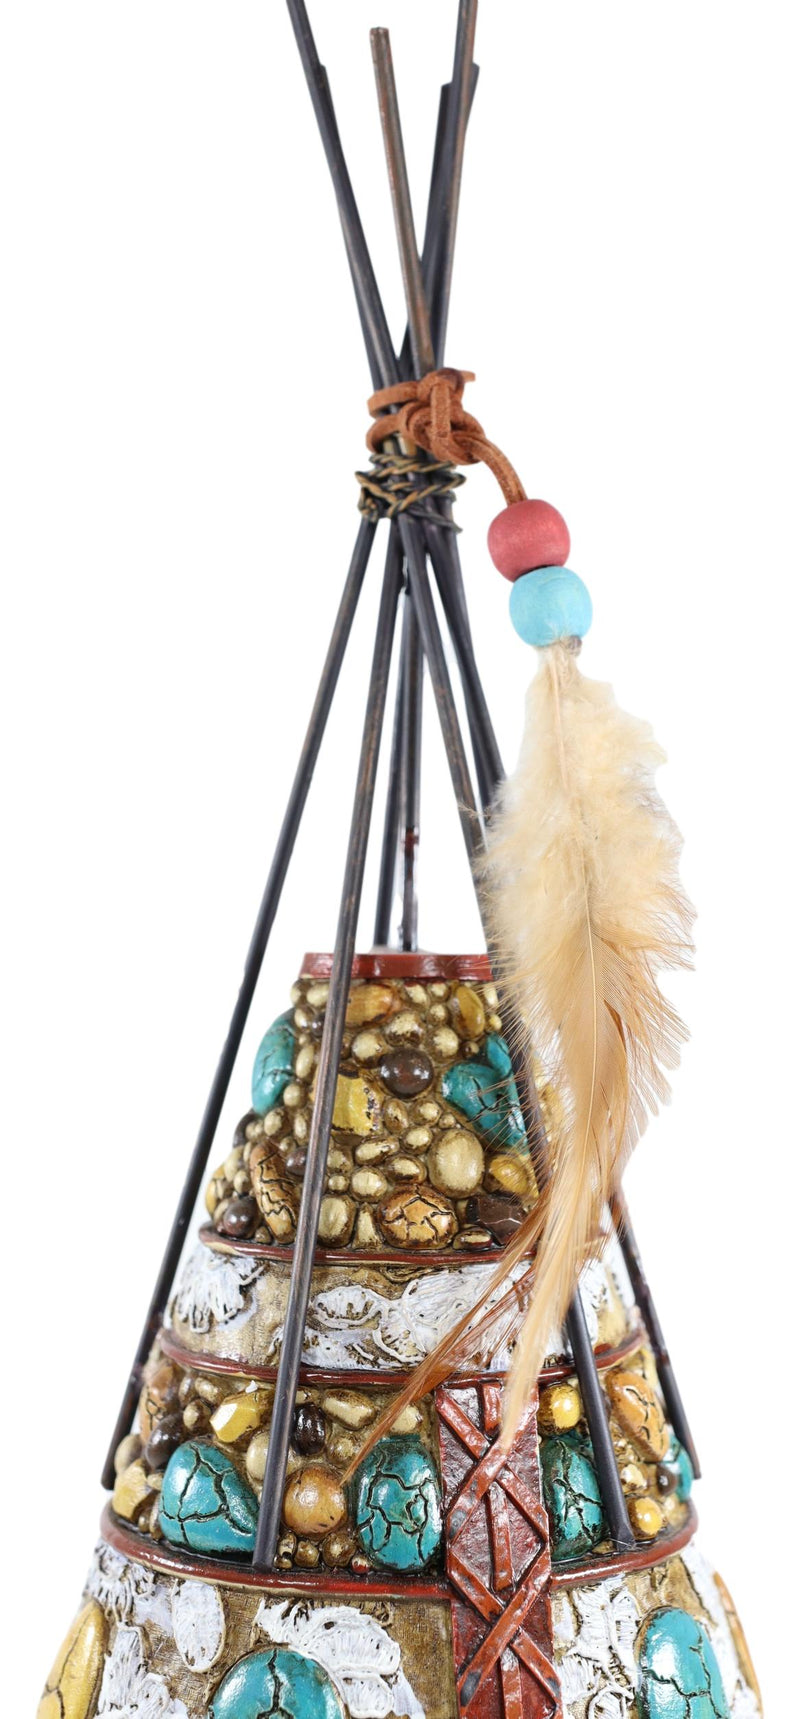 Southwestern Dreamcatcher Feathers Turquoise Rocks Indian Teepee Hut Figurine